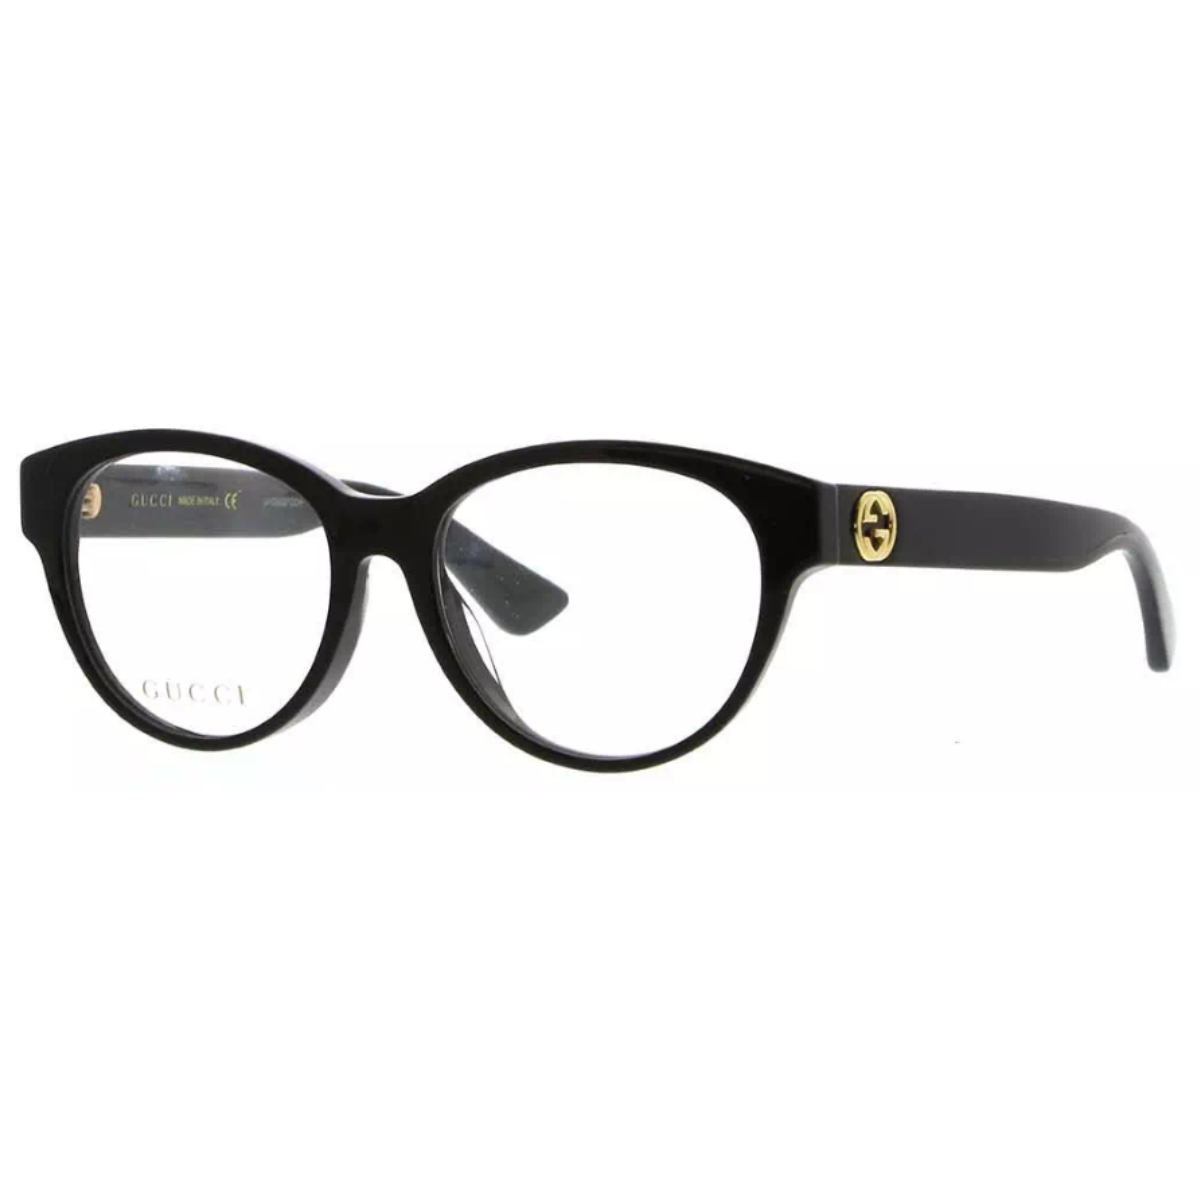 "Gucci 0039OA Frame: Stylish Eyewear for Men and Women at Optorium"